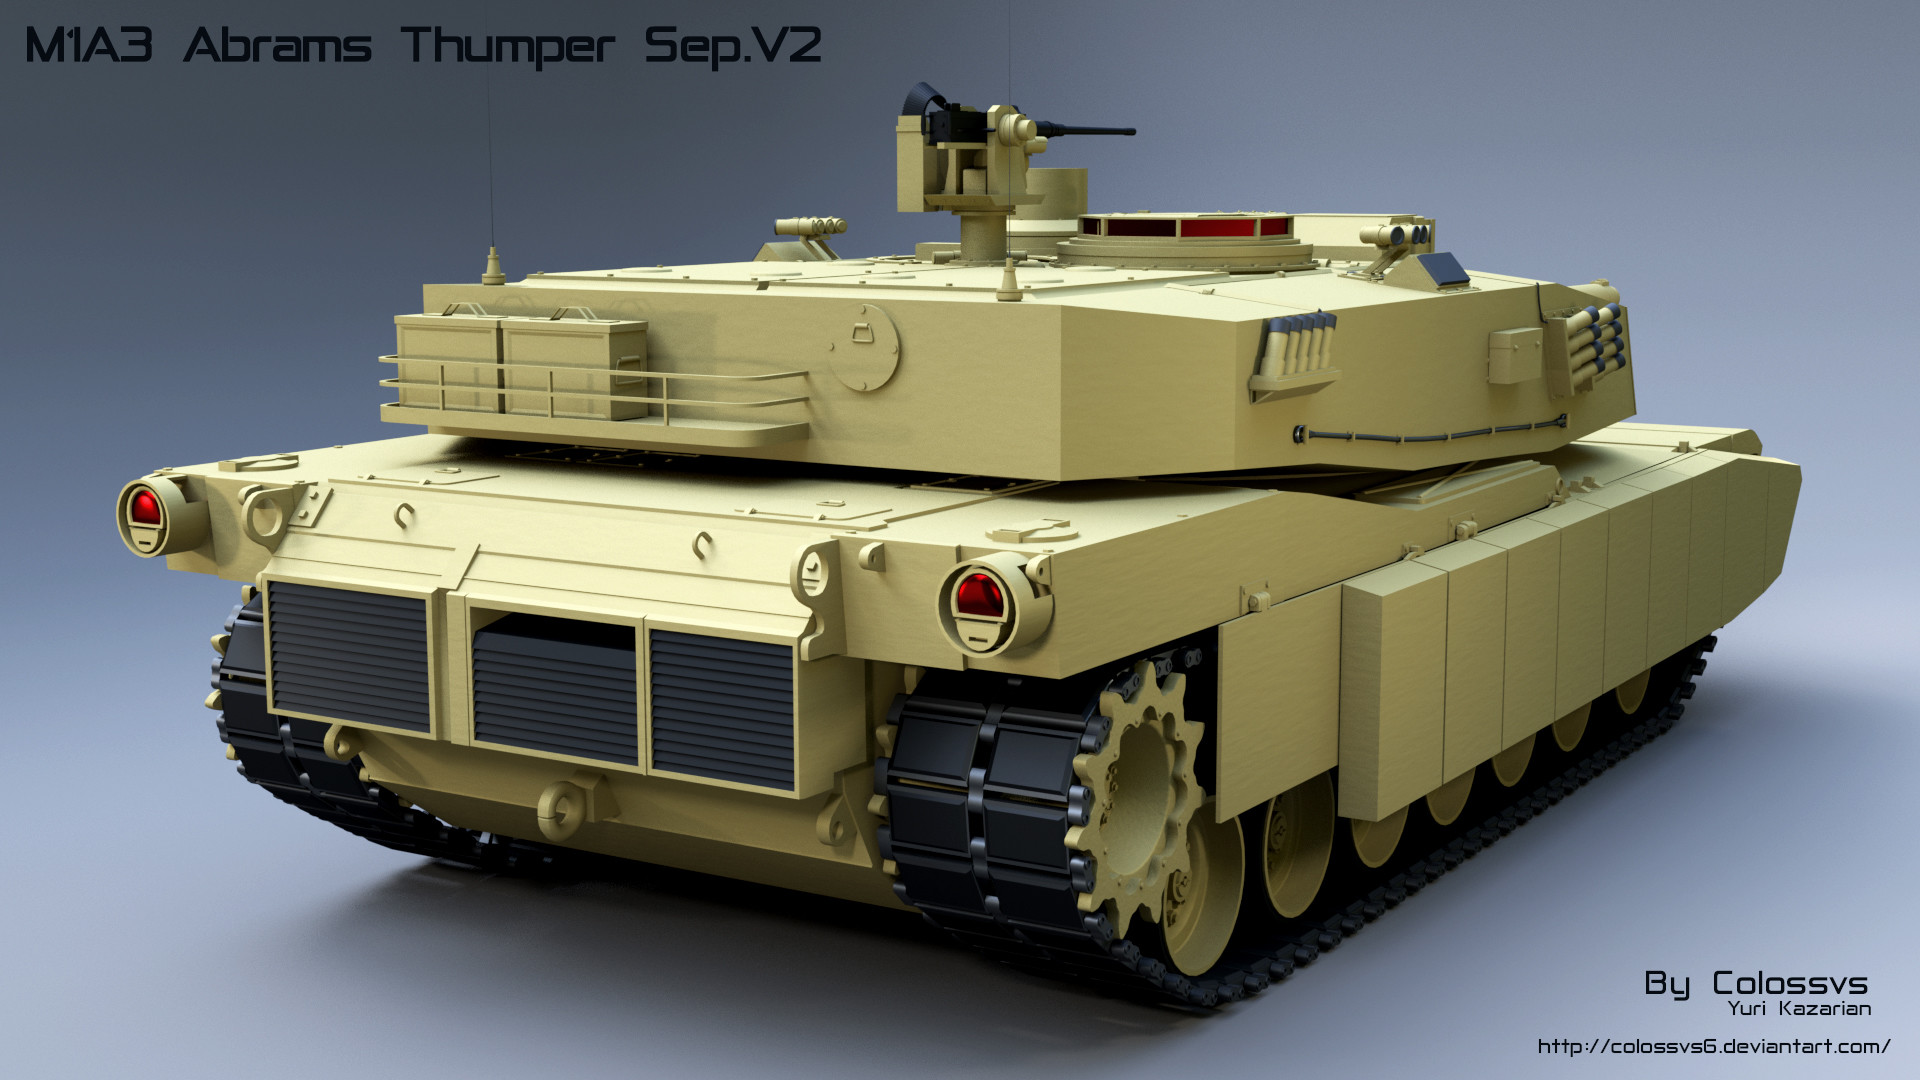 M1A3 Abrams Thumper Sep.V2 Concept.